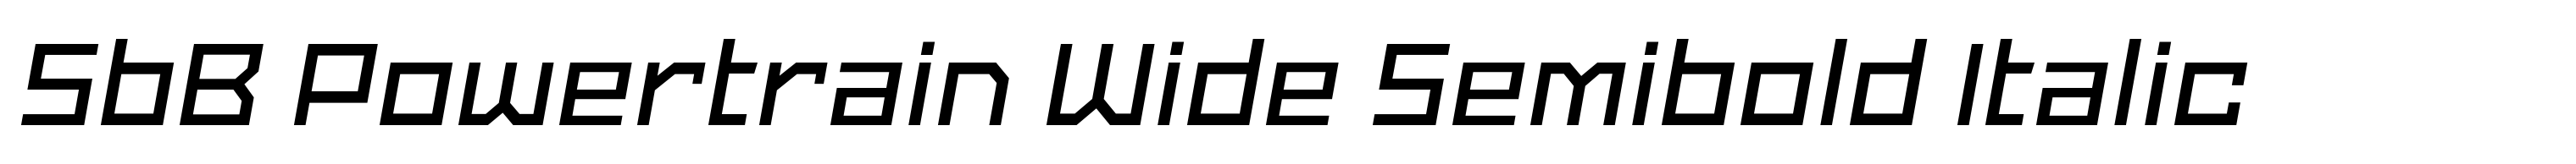 SbB Powertrain Wide Semibold Italic